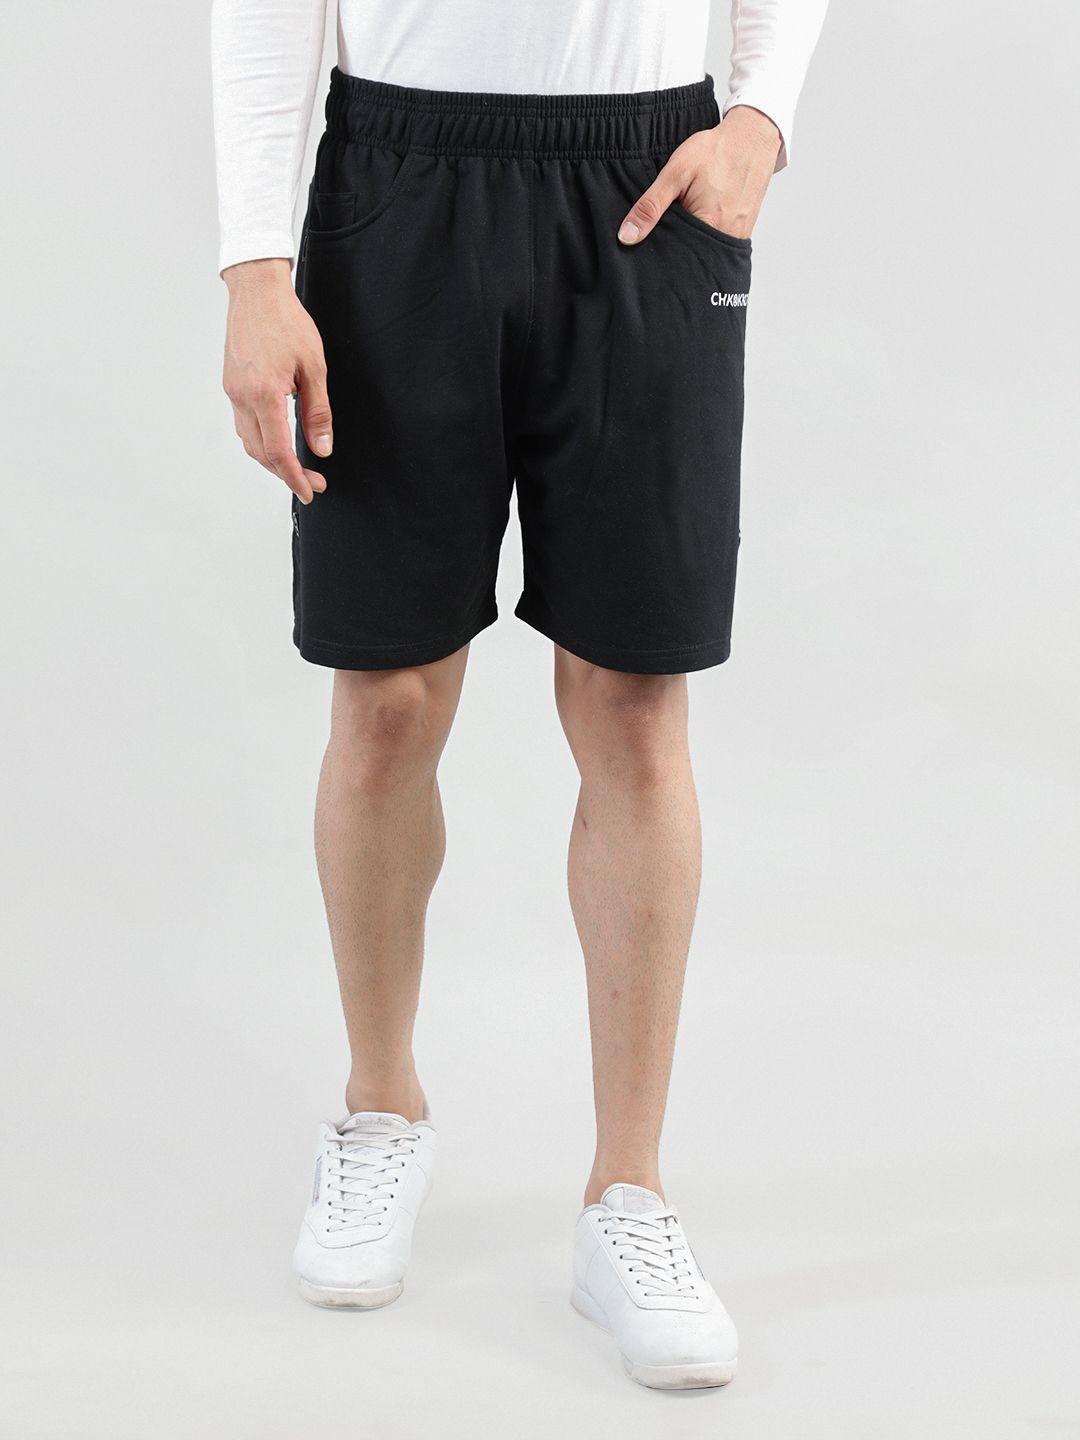 chkokko men black outdoor sports shorts